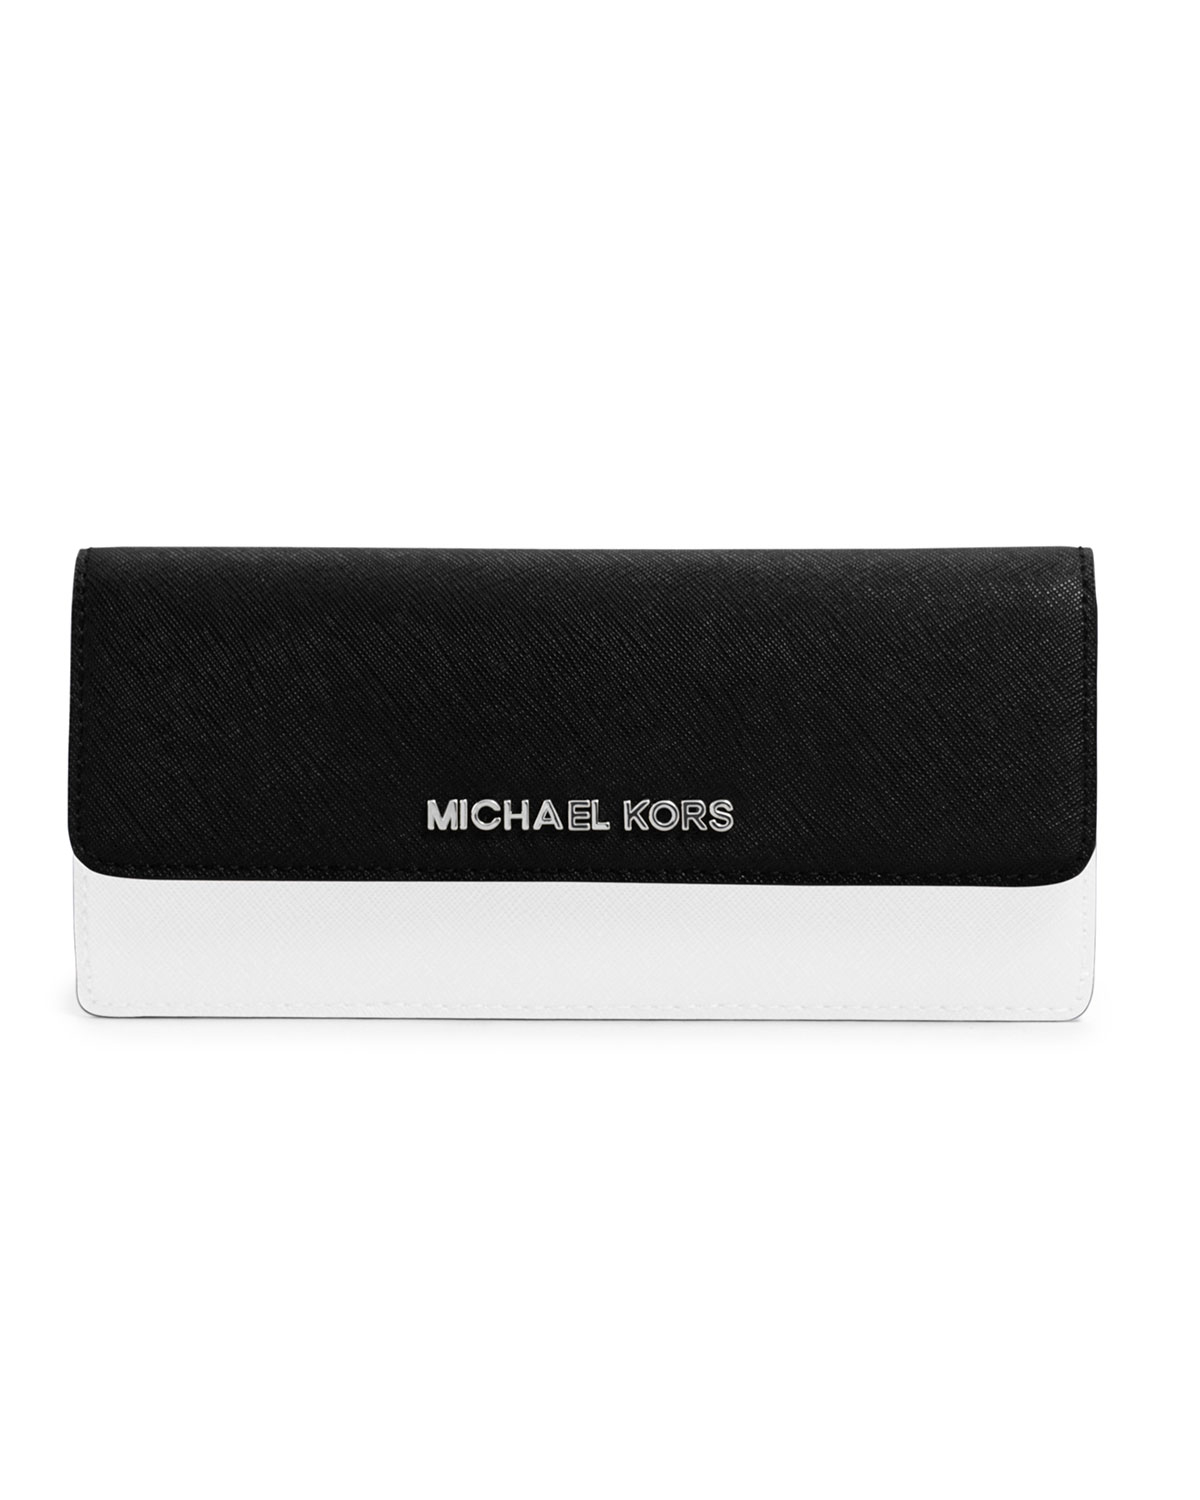 michael kors wallet black and white